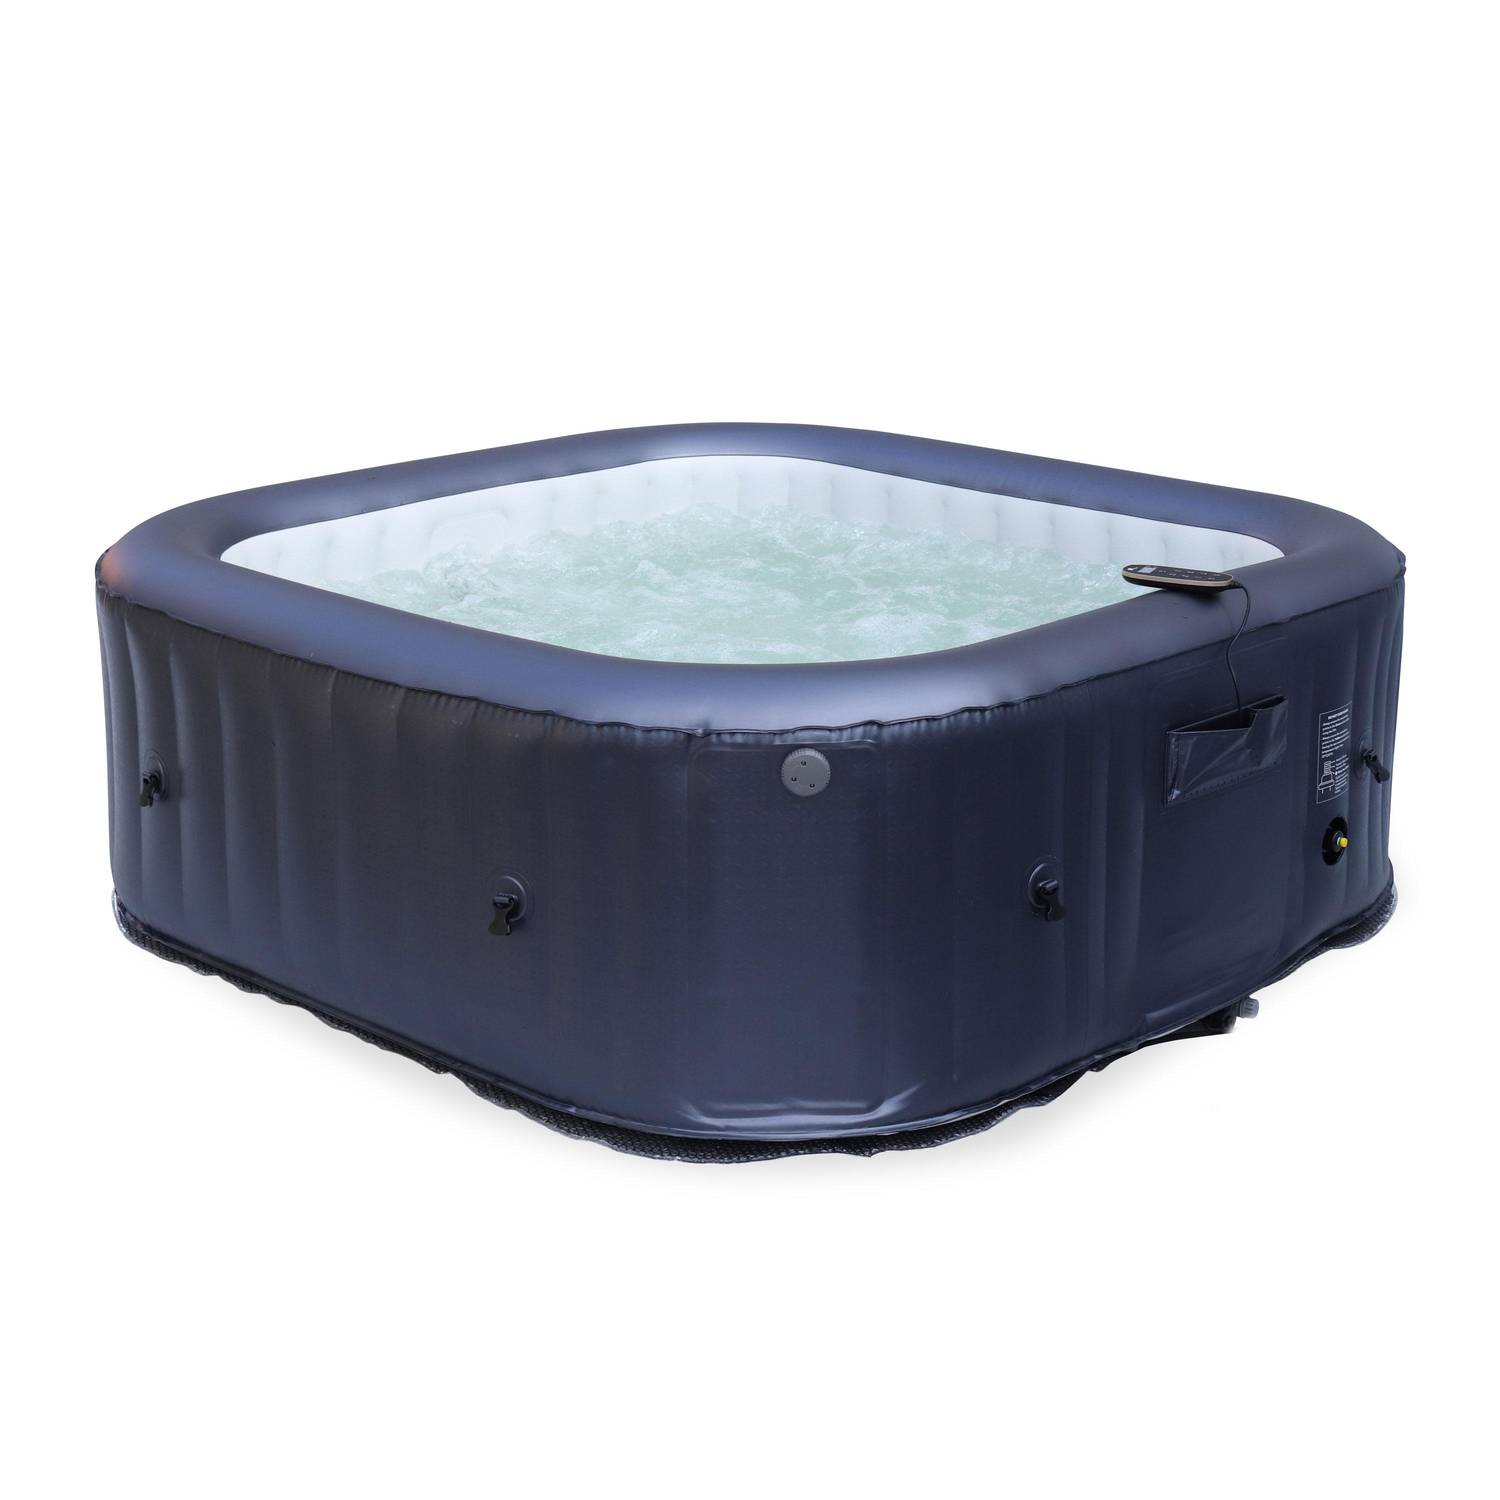  6-person premium square inflatable hot tub MSpa - 185cm, PVC, pump, heating, self-inflating, massage hydrojets, 2 filter cartridges, cover - Otium 6 - Blue Photo4